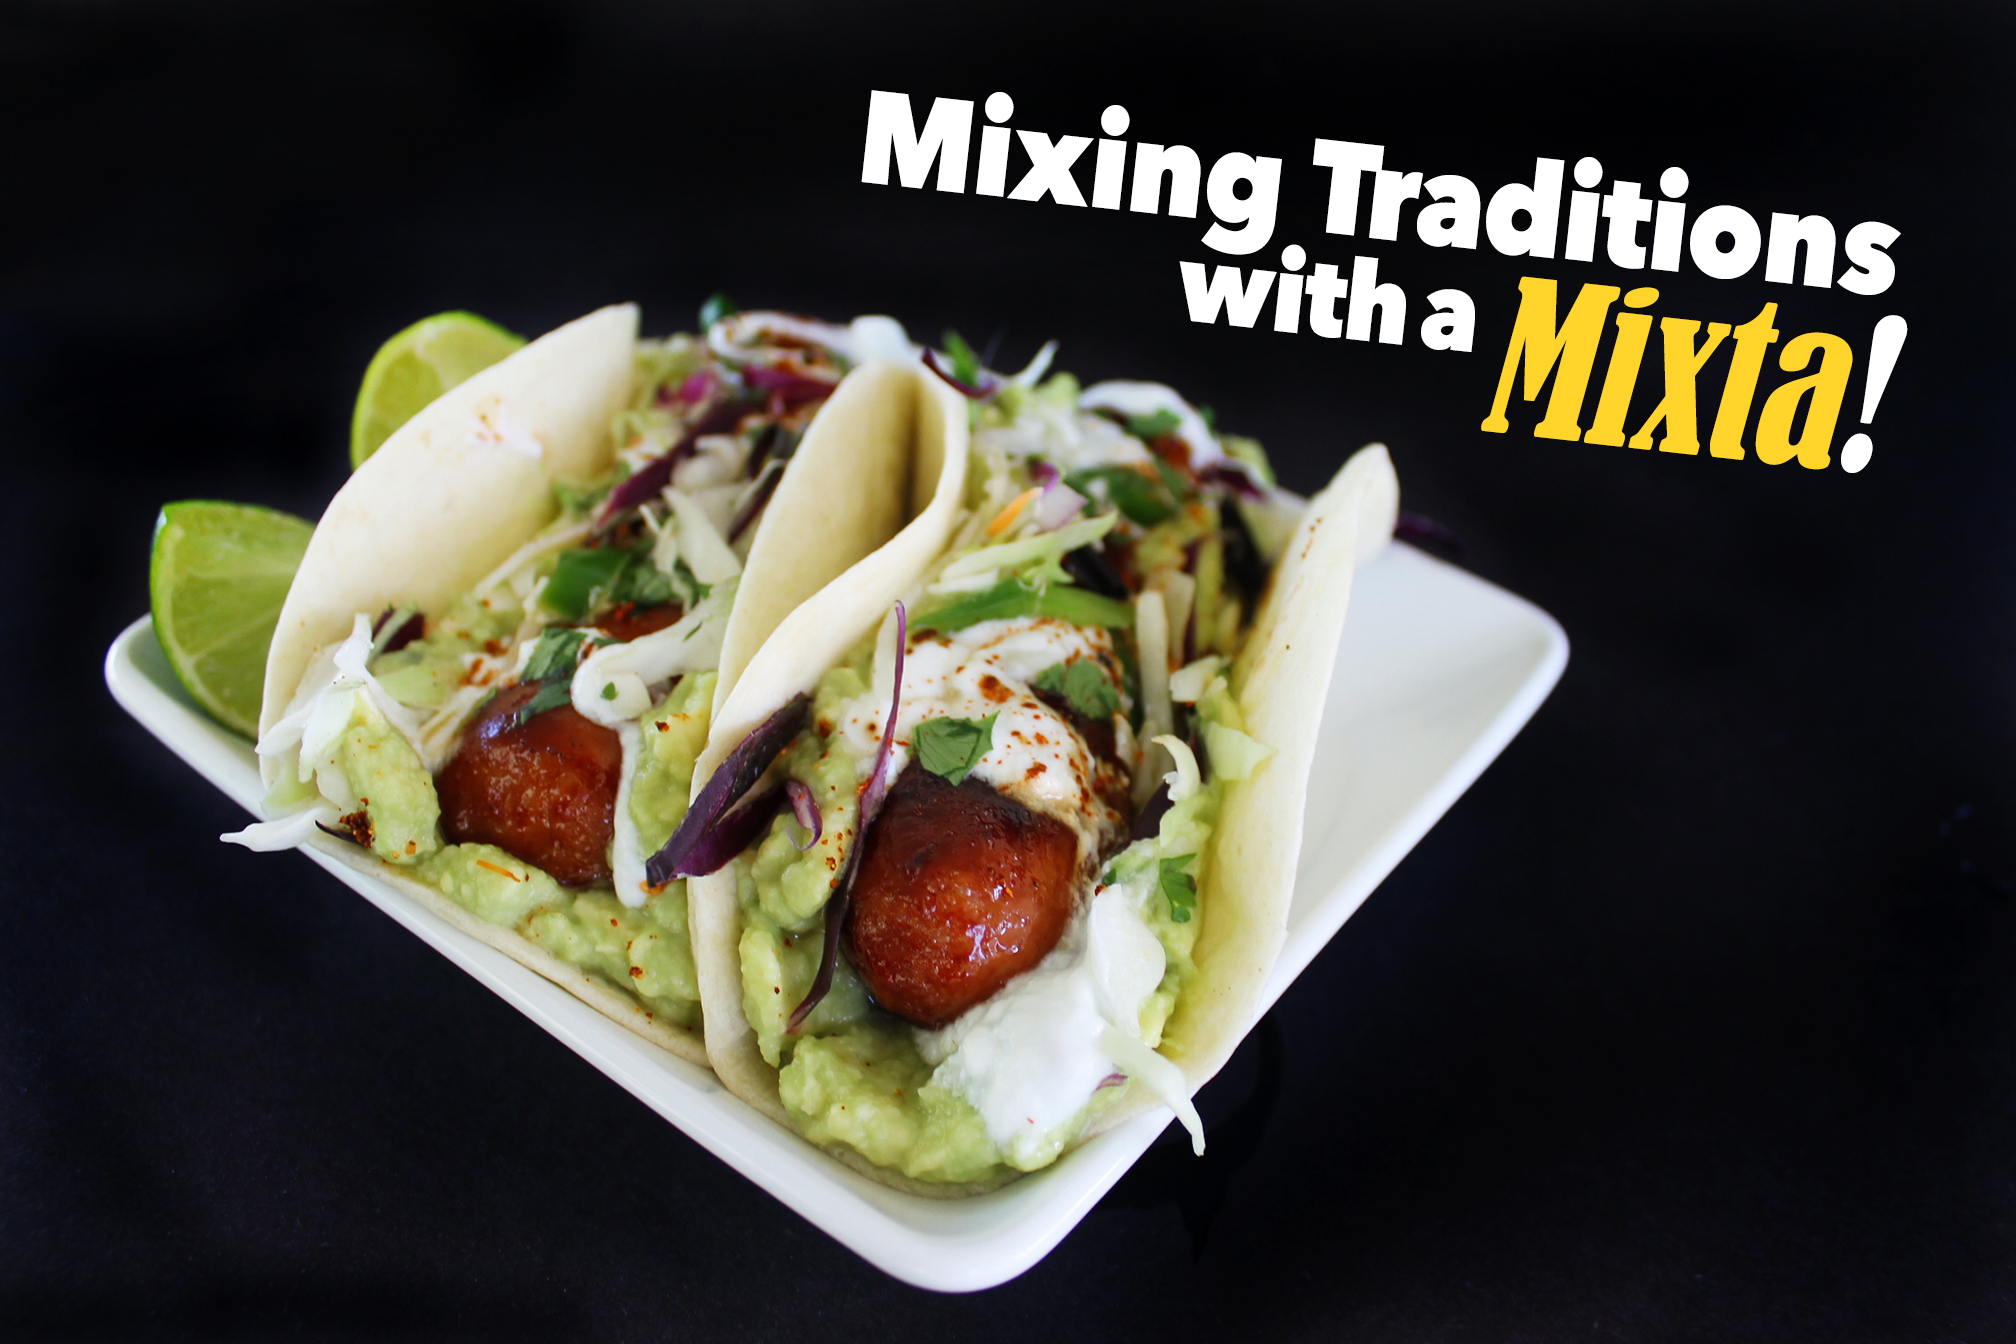 Mix Traditions With a Mixta Recipe!